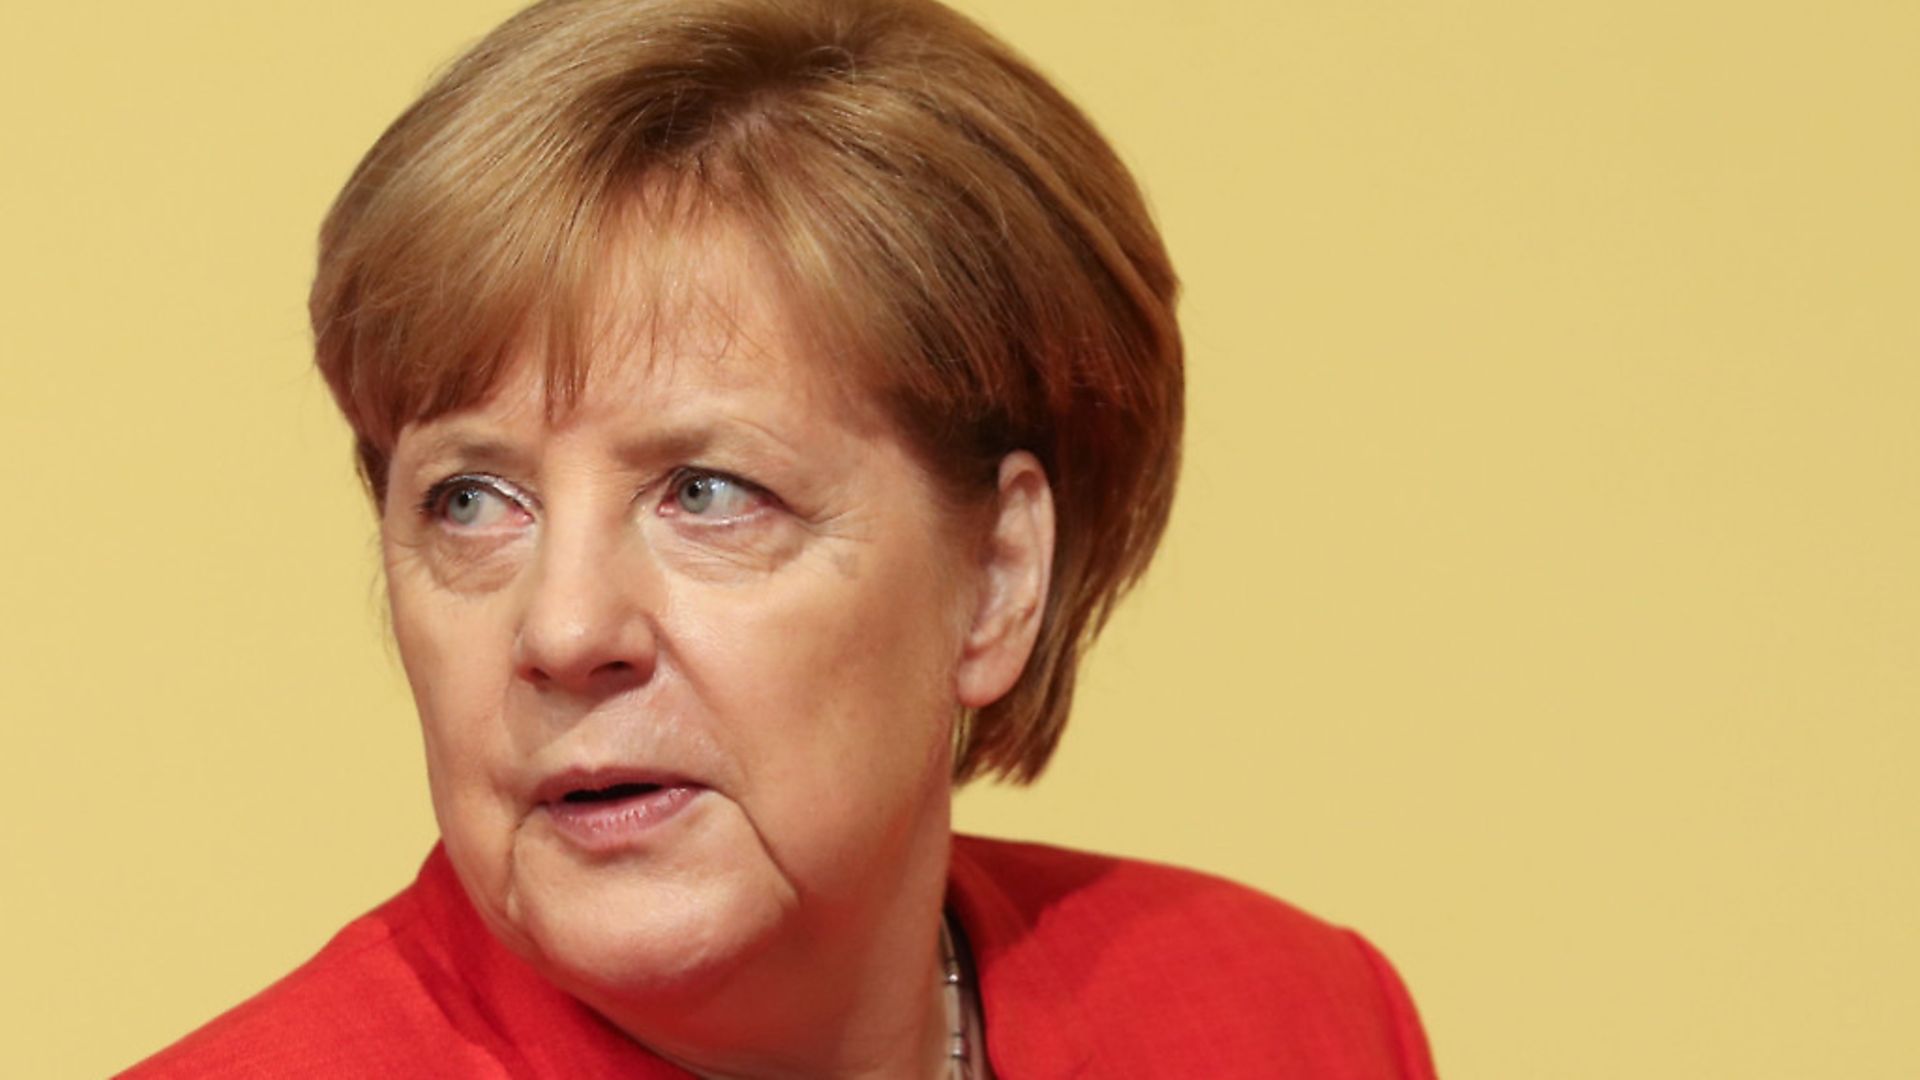 German Chancellor Angela Merkel (question seven). Photo: Matt Cardy/PA Images - Credit: PA Archive/PA Images